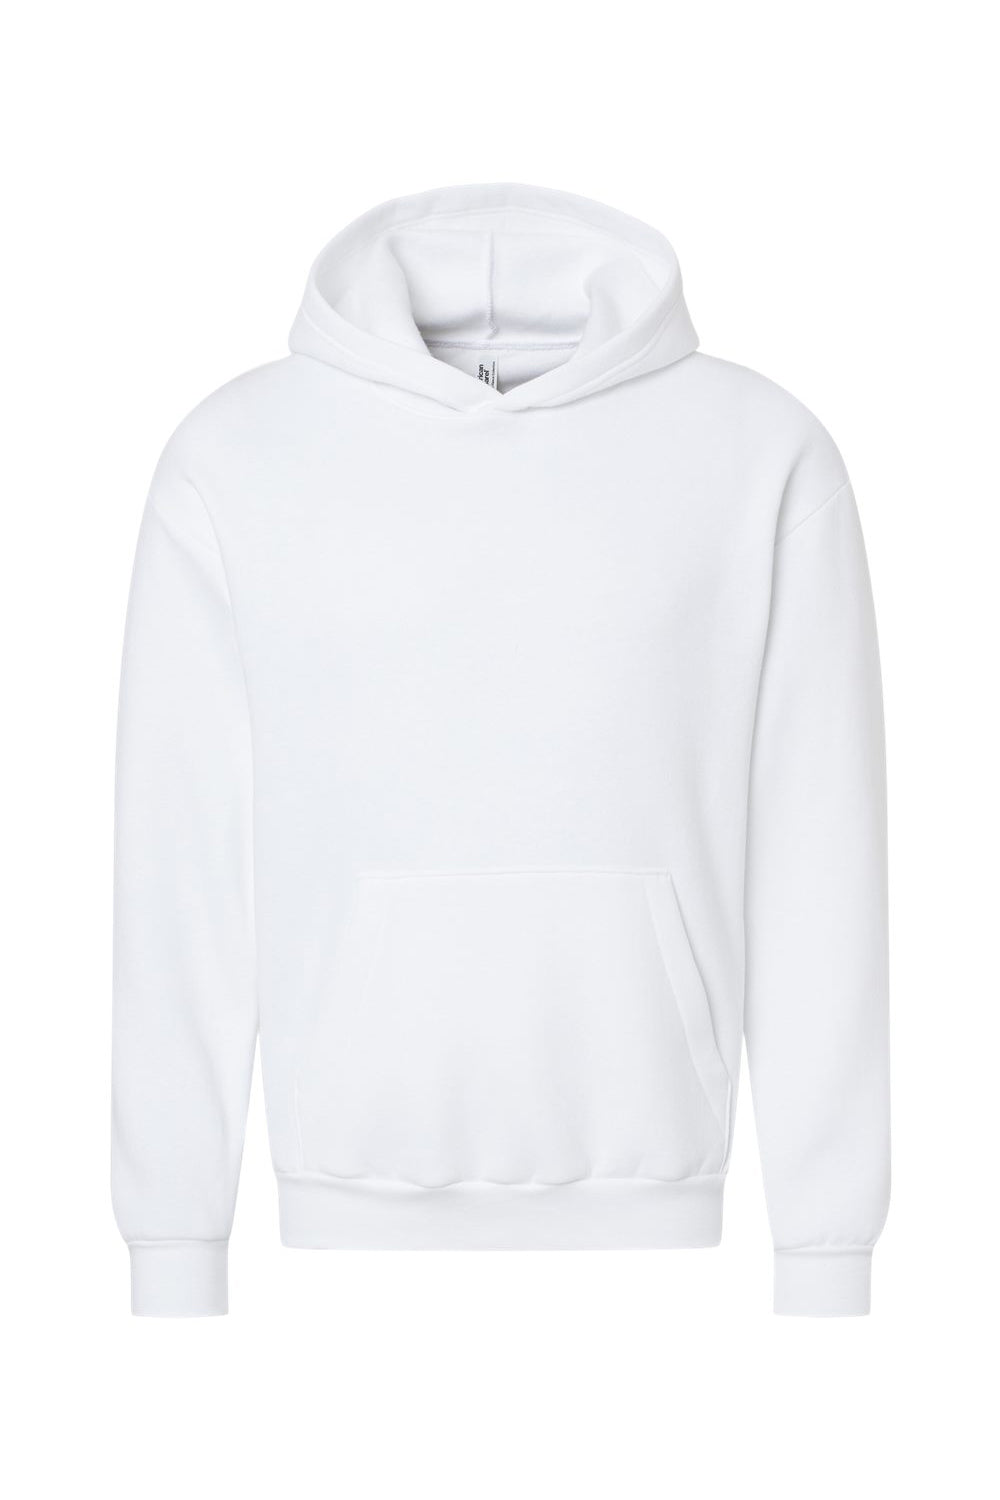 American Apparel RF498 Mens ReFlex Fleece Hooded Sweatshirt Hoodie White Flat Front